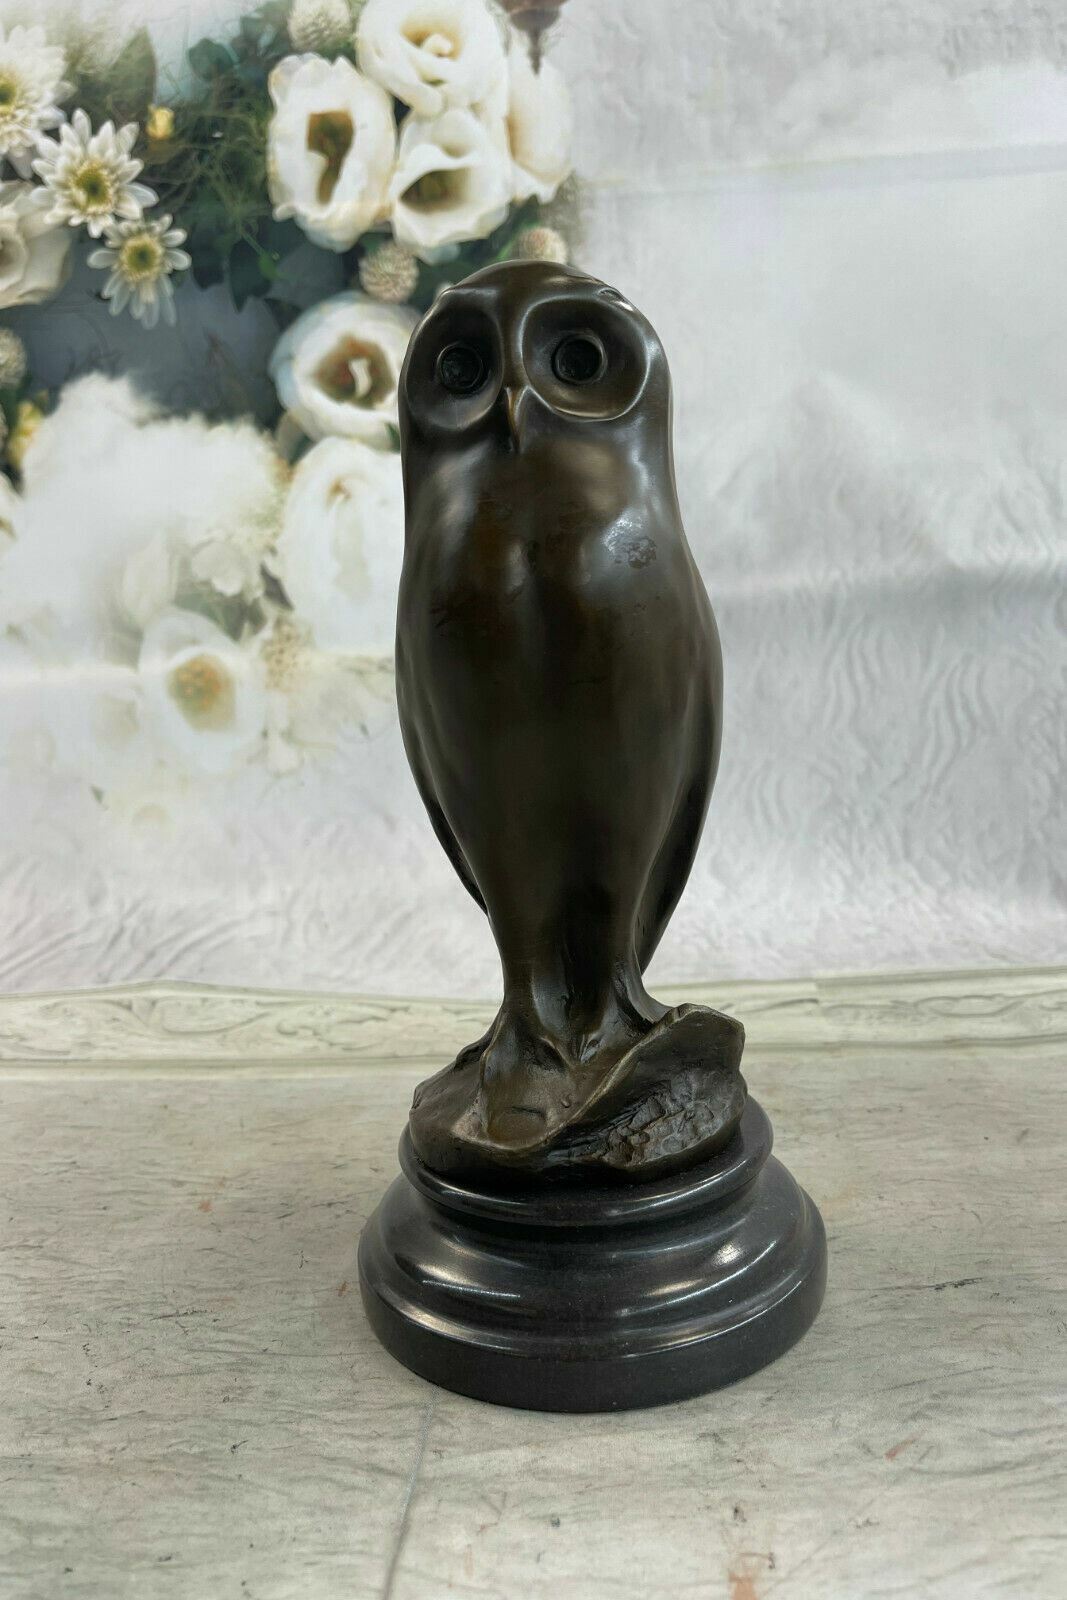 Handcrafted by Lost Wax Method Modern Art Owl Bronze Sculpture Figurine Artwork